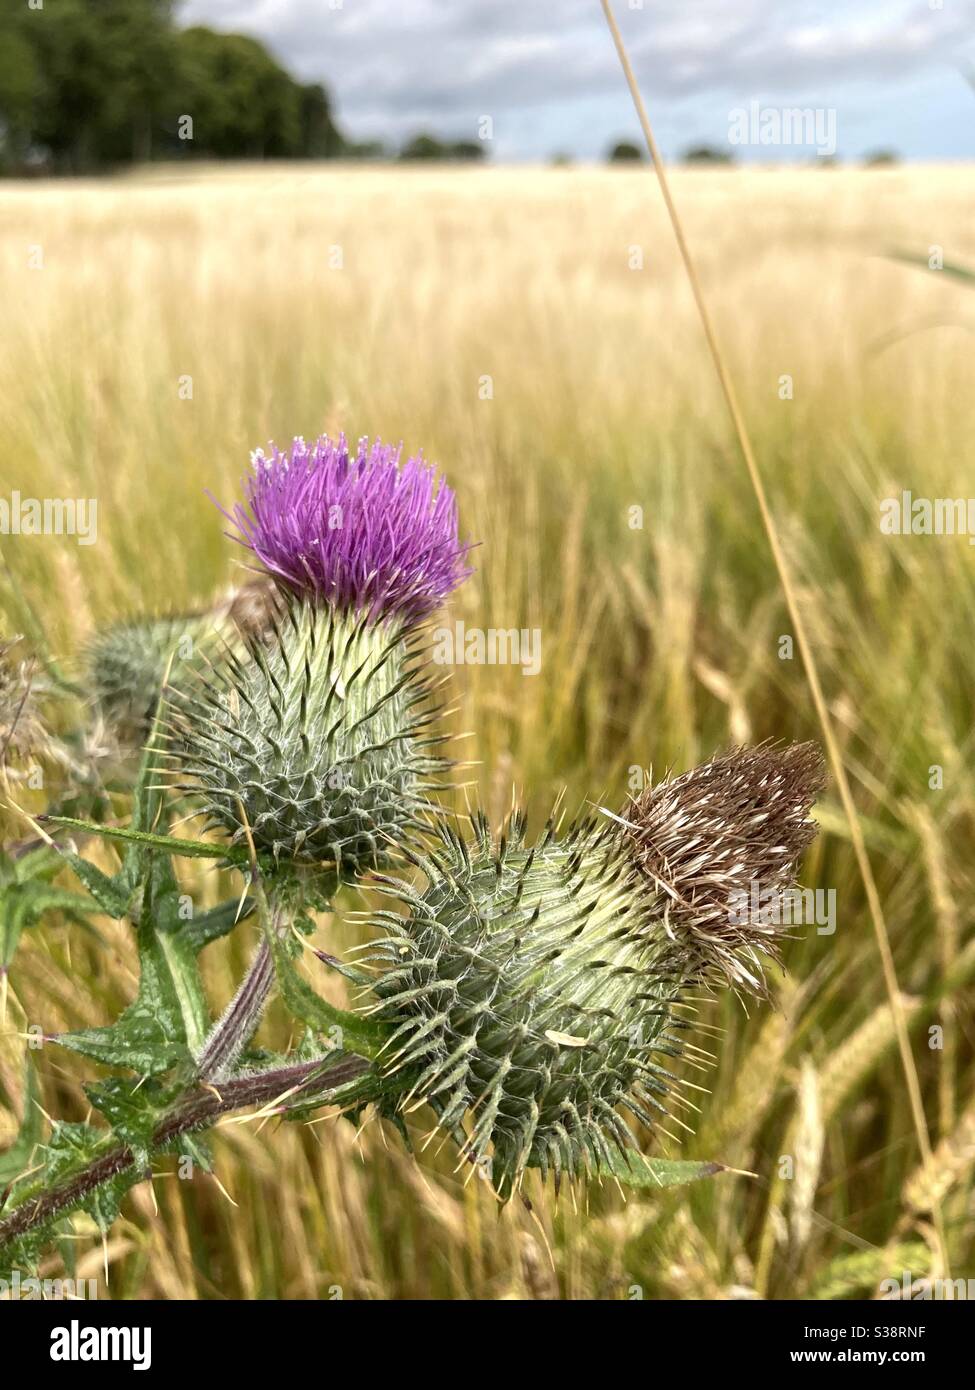 Scottish thistle beside wheat field Stock Photo